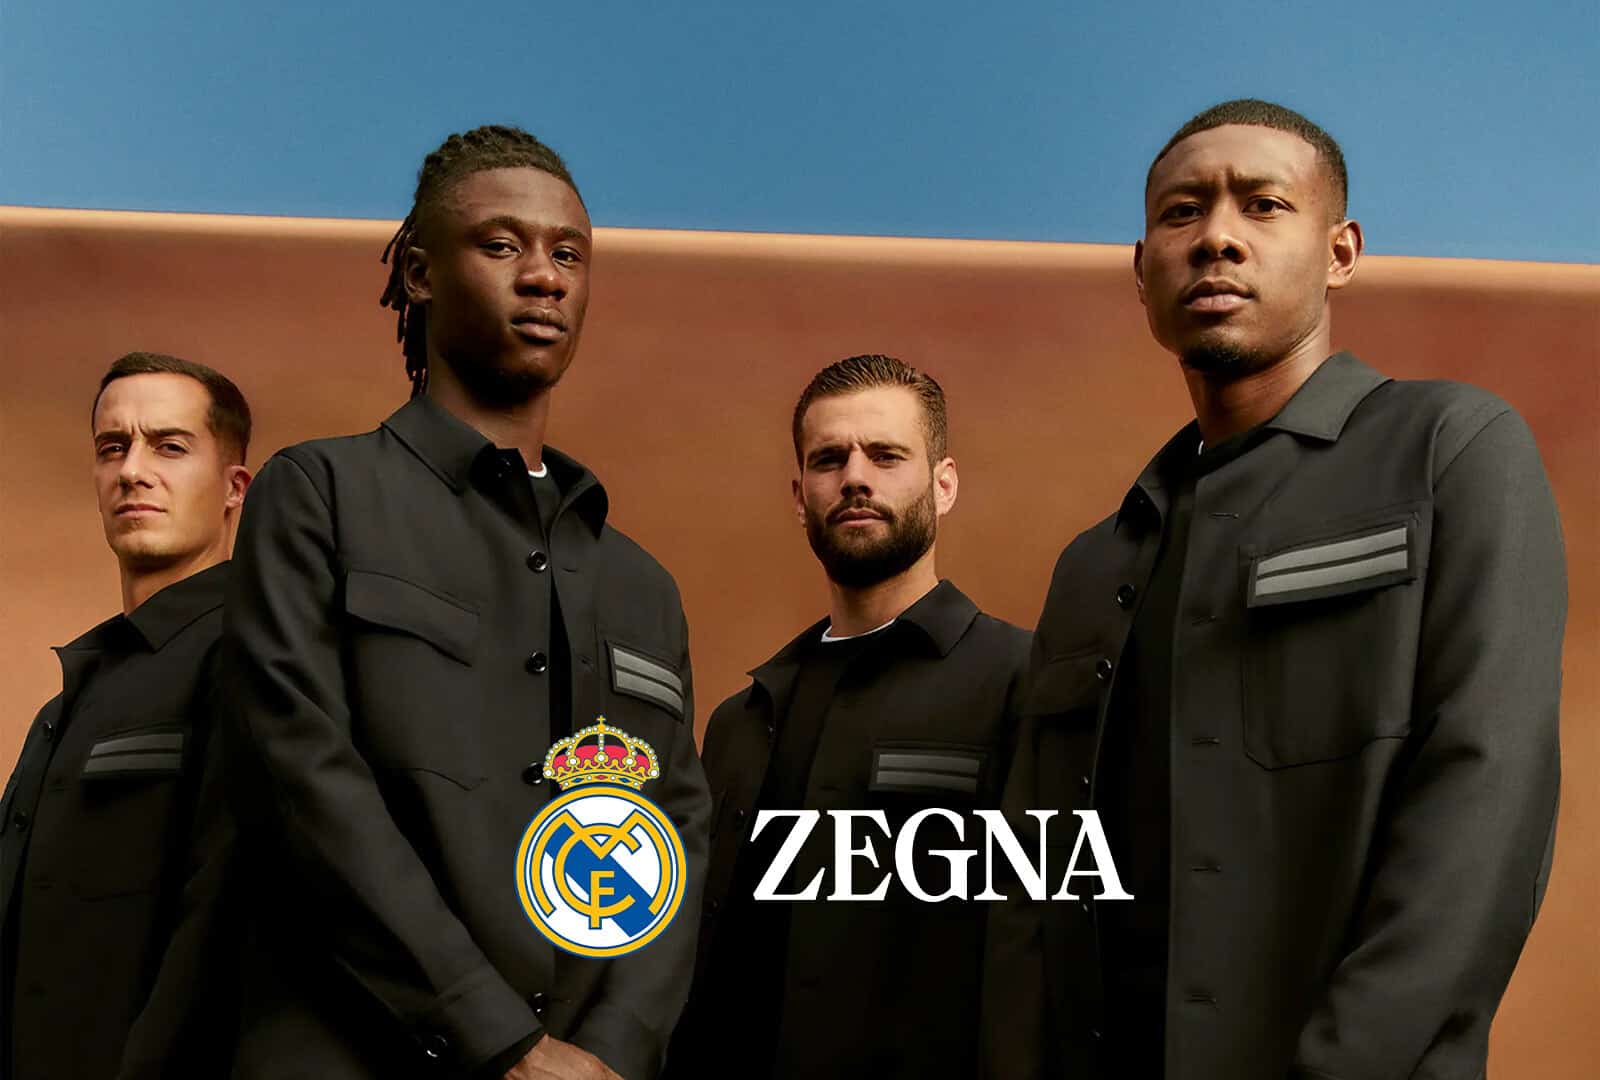 Real Madrid x ZEGNA - Official Travelwear Partner